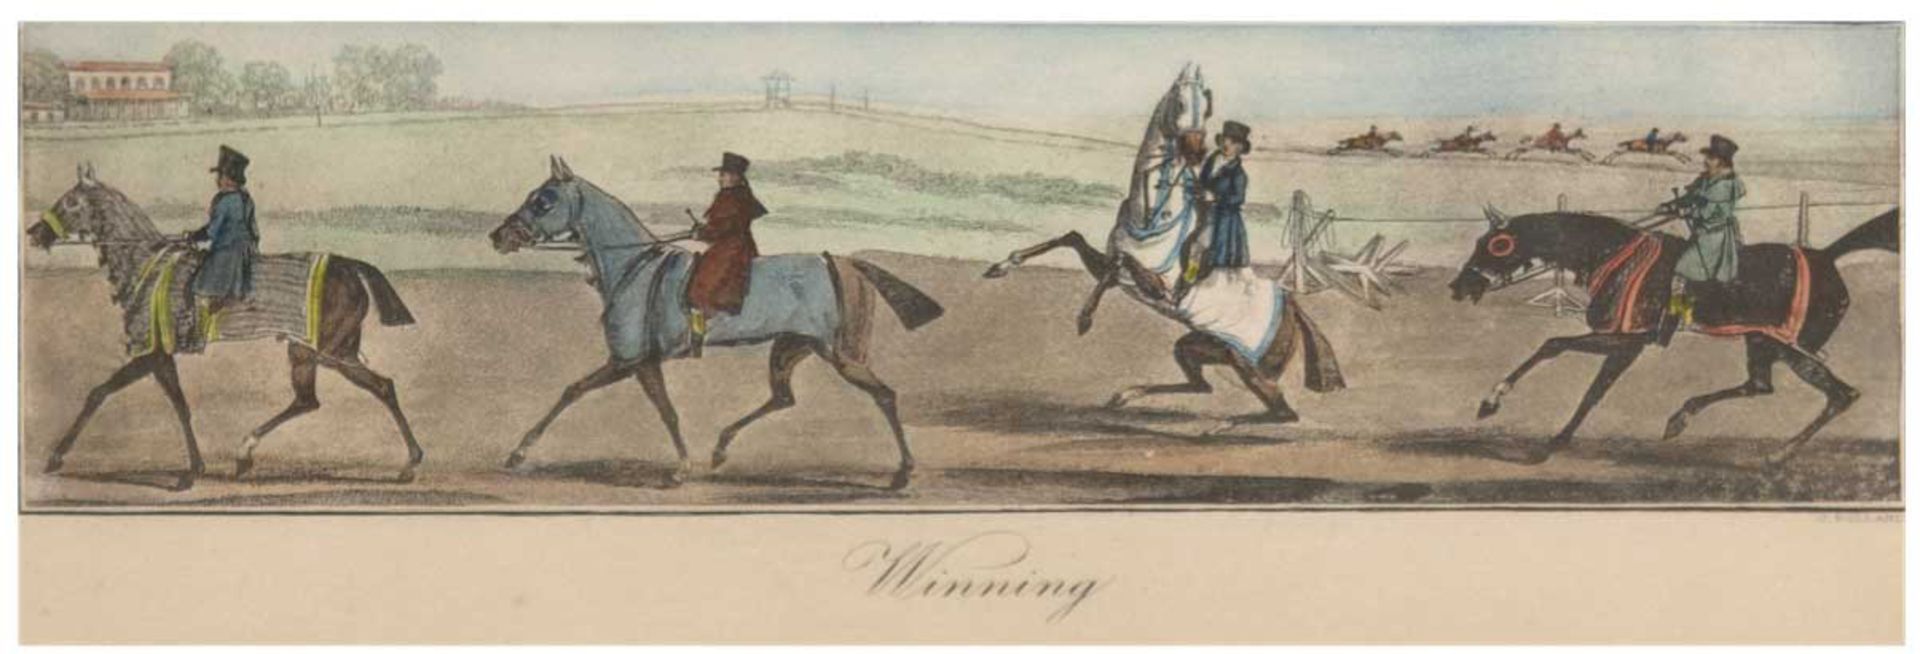 Pollard, James (1792-1867) "Winning", Aquatintaradierung, 13x36 cm, Blatt 20x44,5 cm,hinter Glas